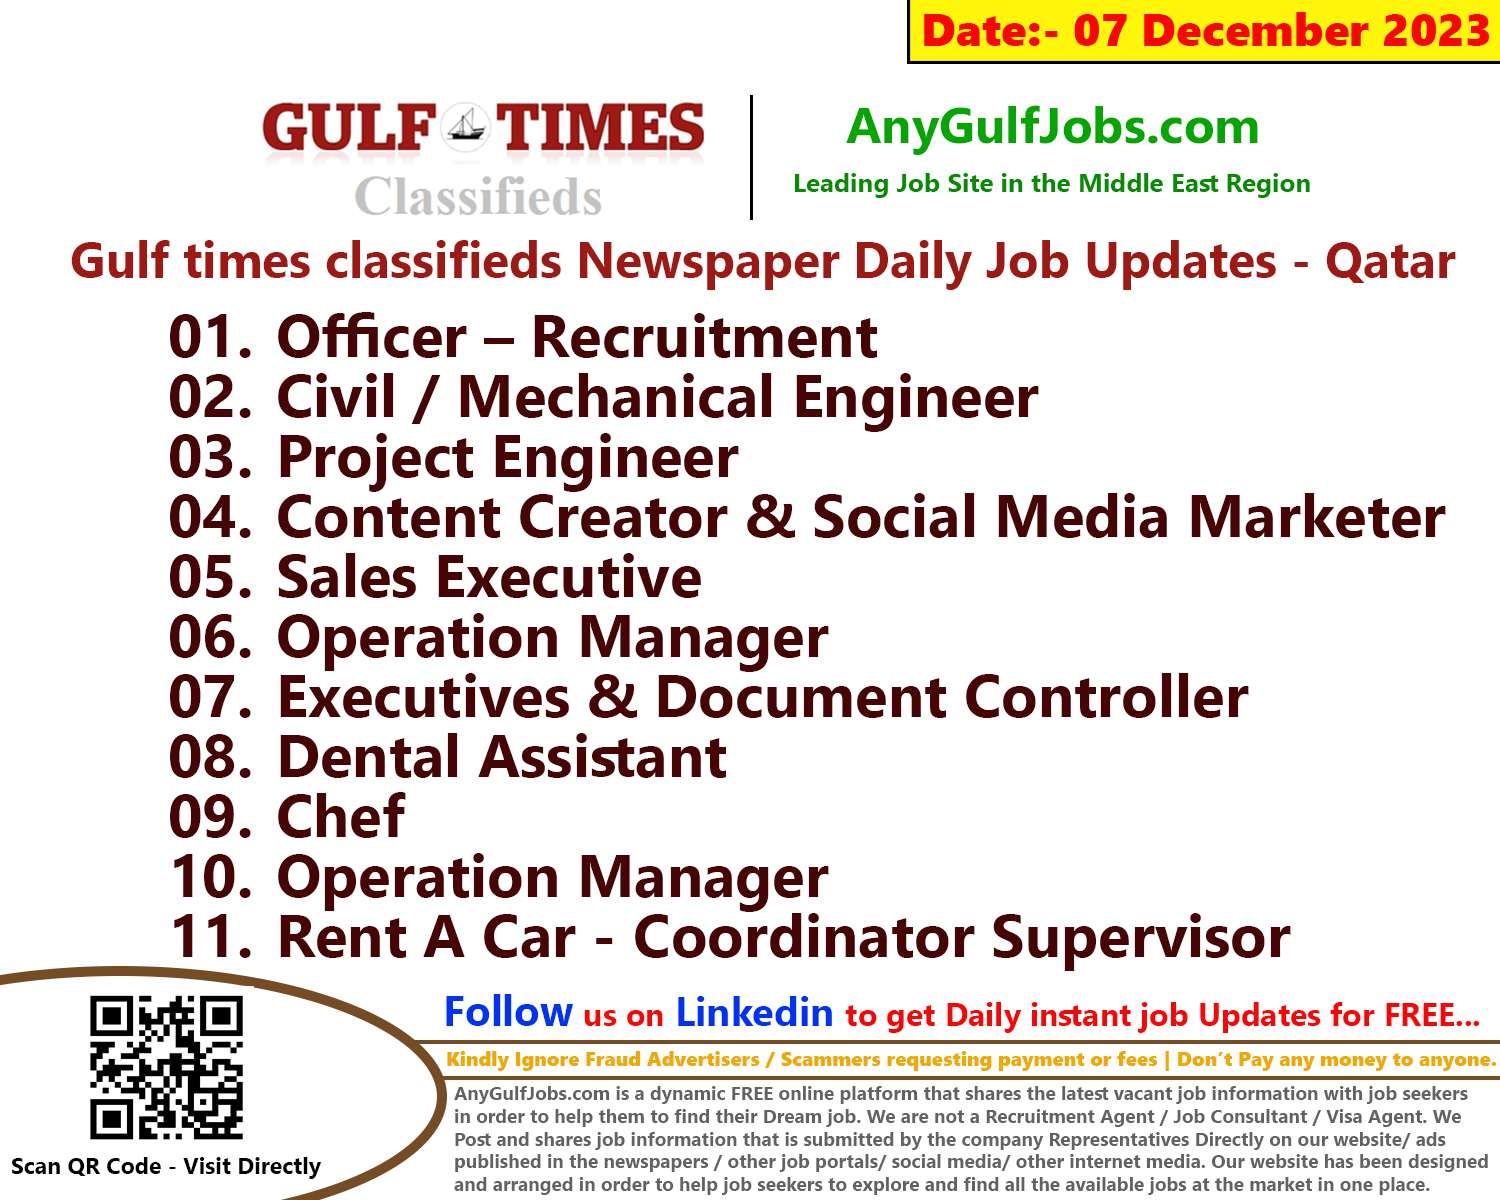 Gulf Times Classifieds Job Vacancies Qatar - 07 December 2023